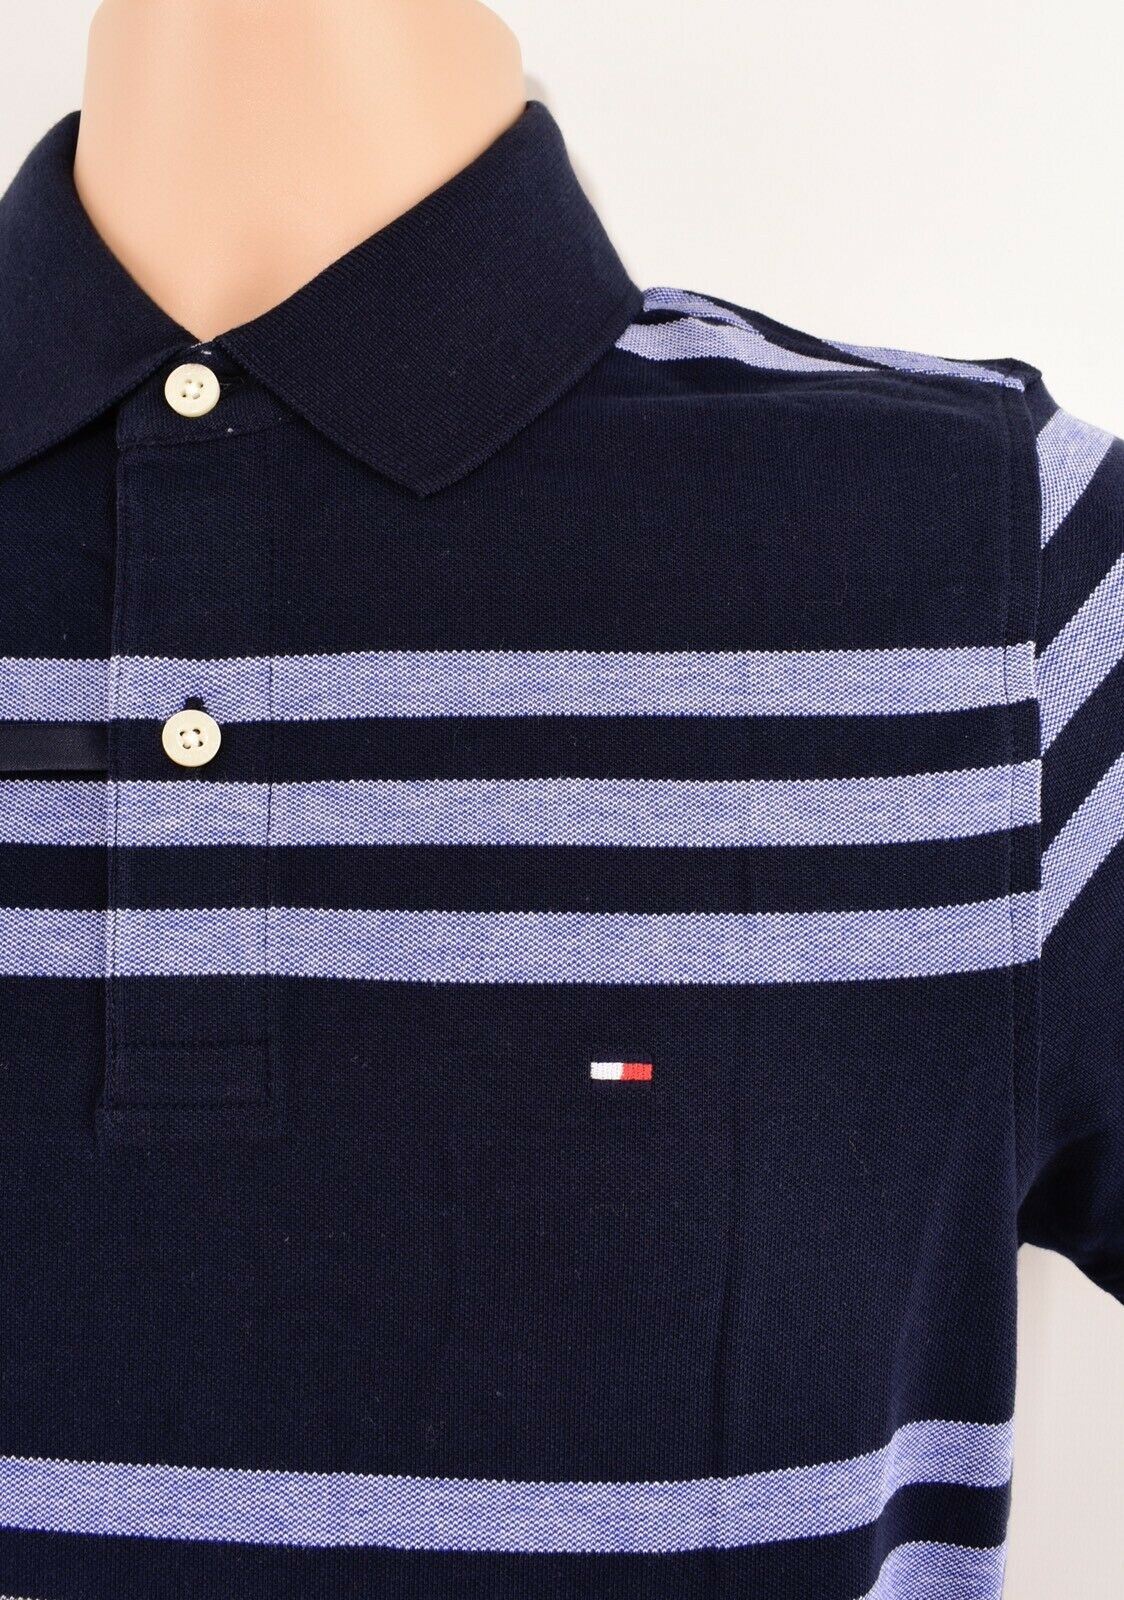 TOMMY HILFIGER Men's TH FLEX Slim Fit Striped Polo Shirt, Blue, size S, size M